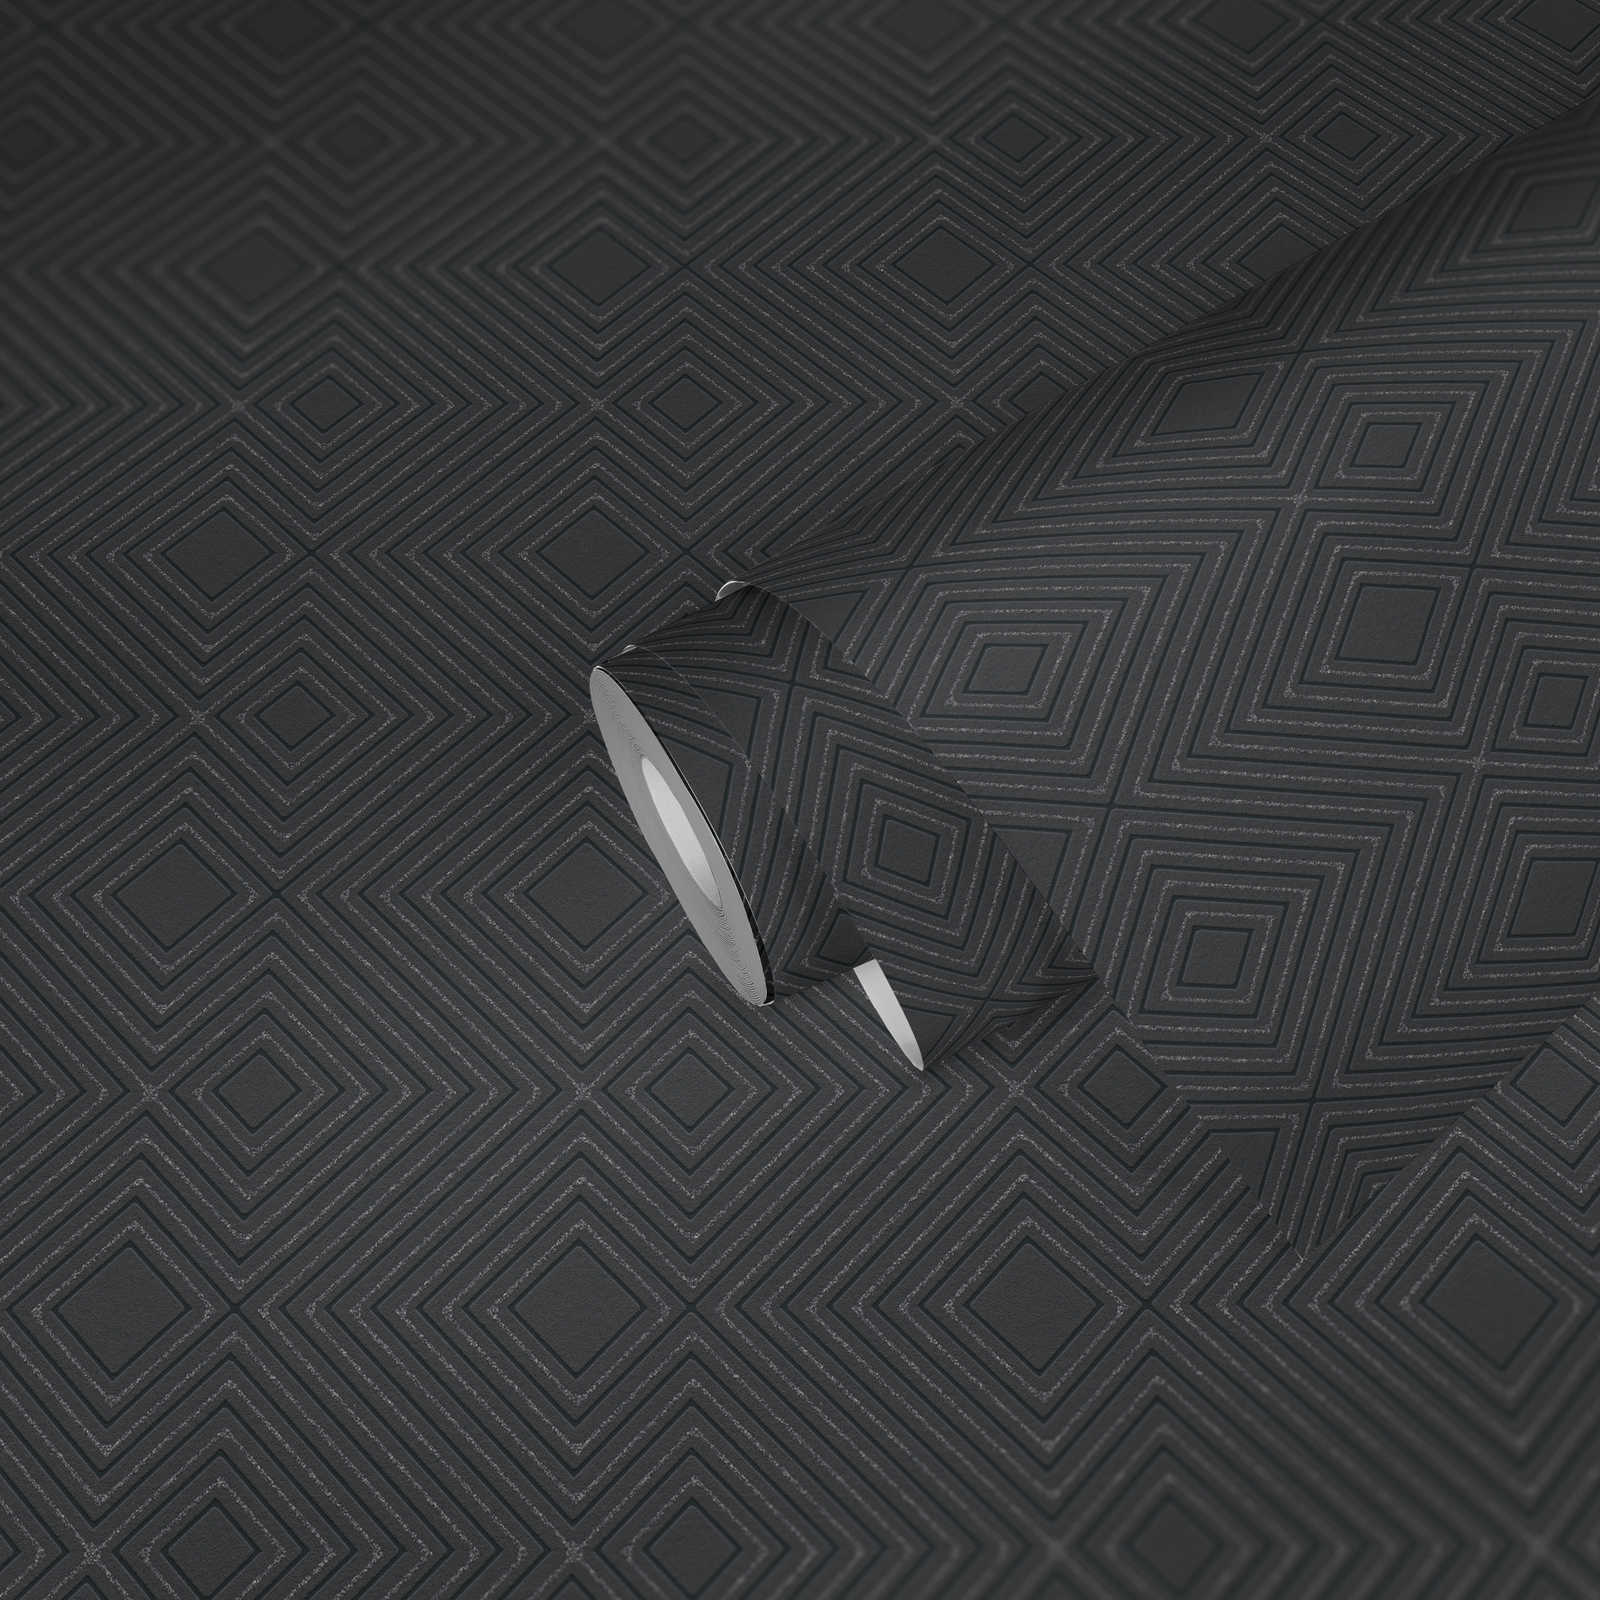             Geometric pattern wallpaper with metallic glitter - black
        